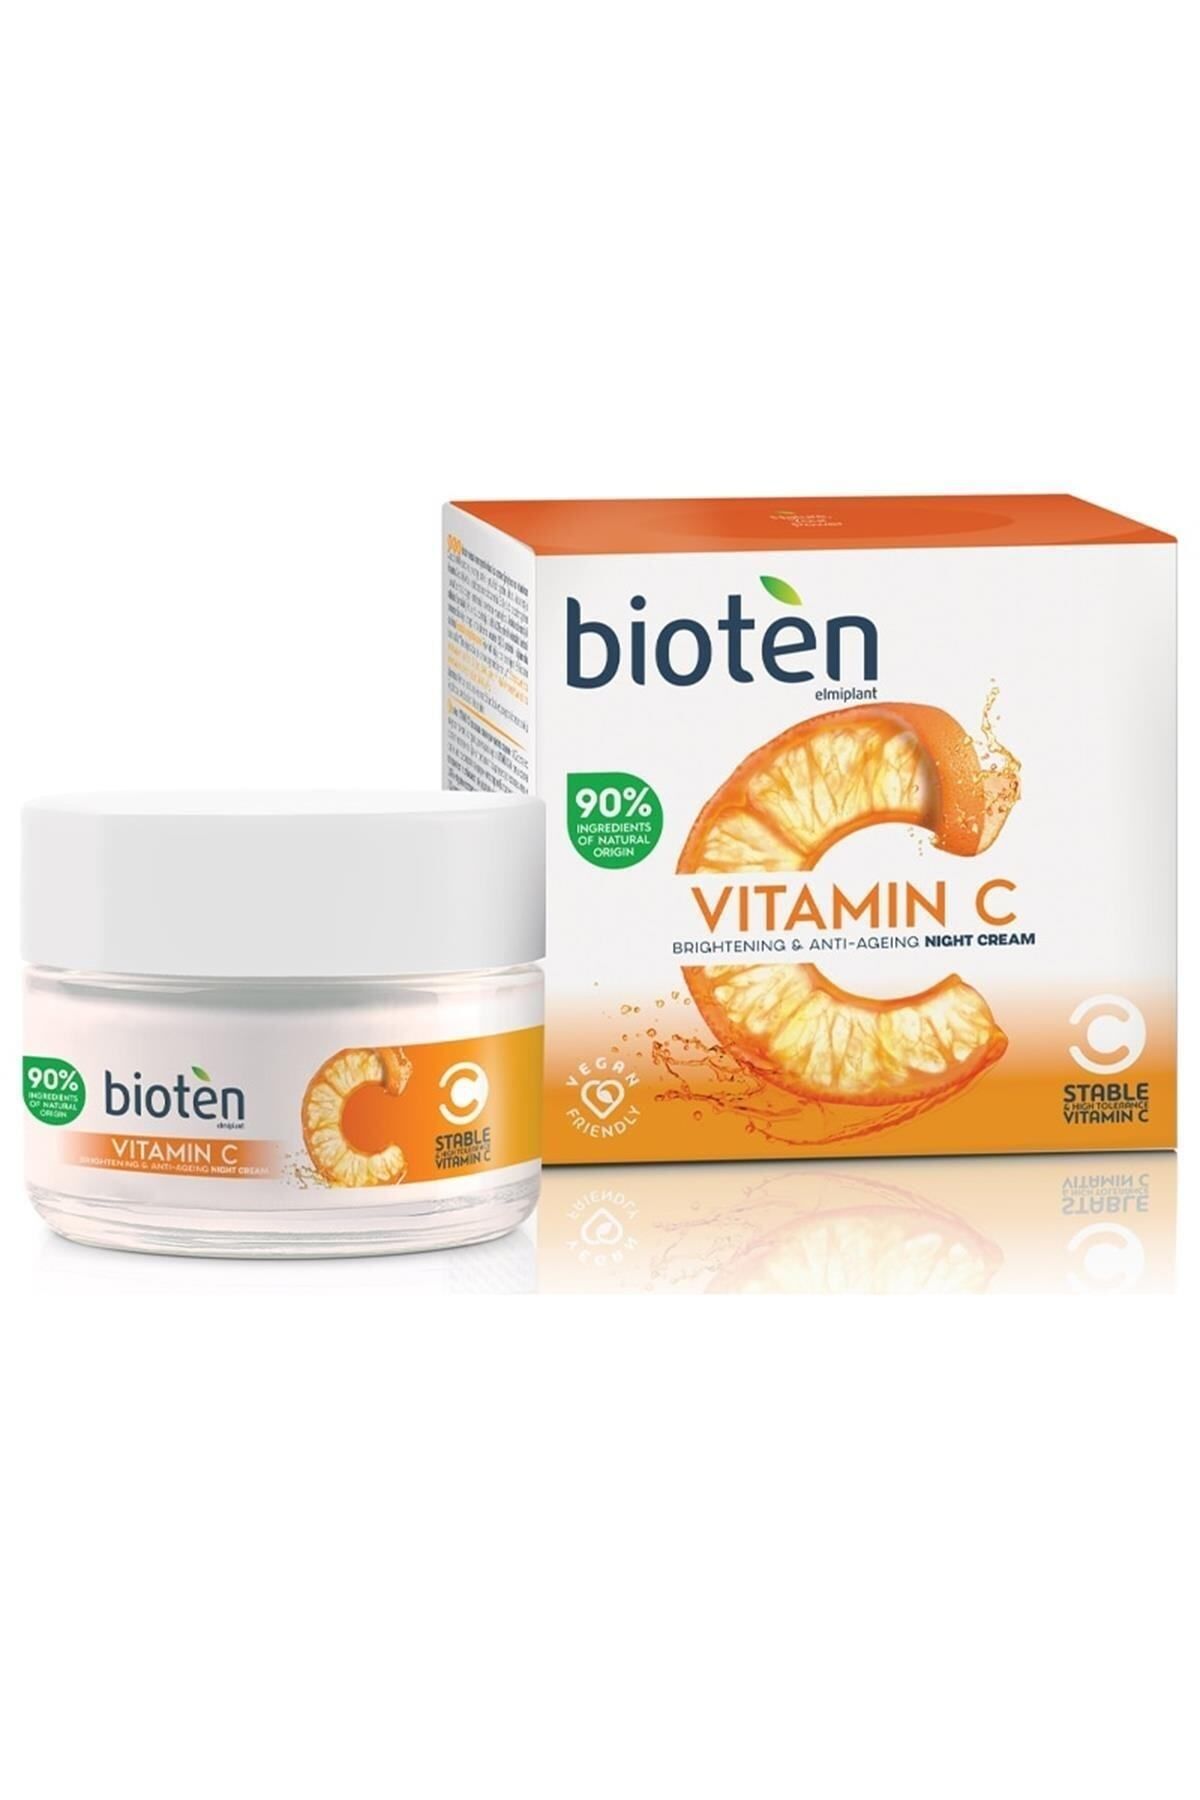 Bioten Vitamin C Brightening & Anti-Aging Night Cream 50 Ml